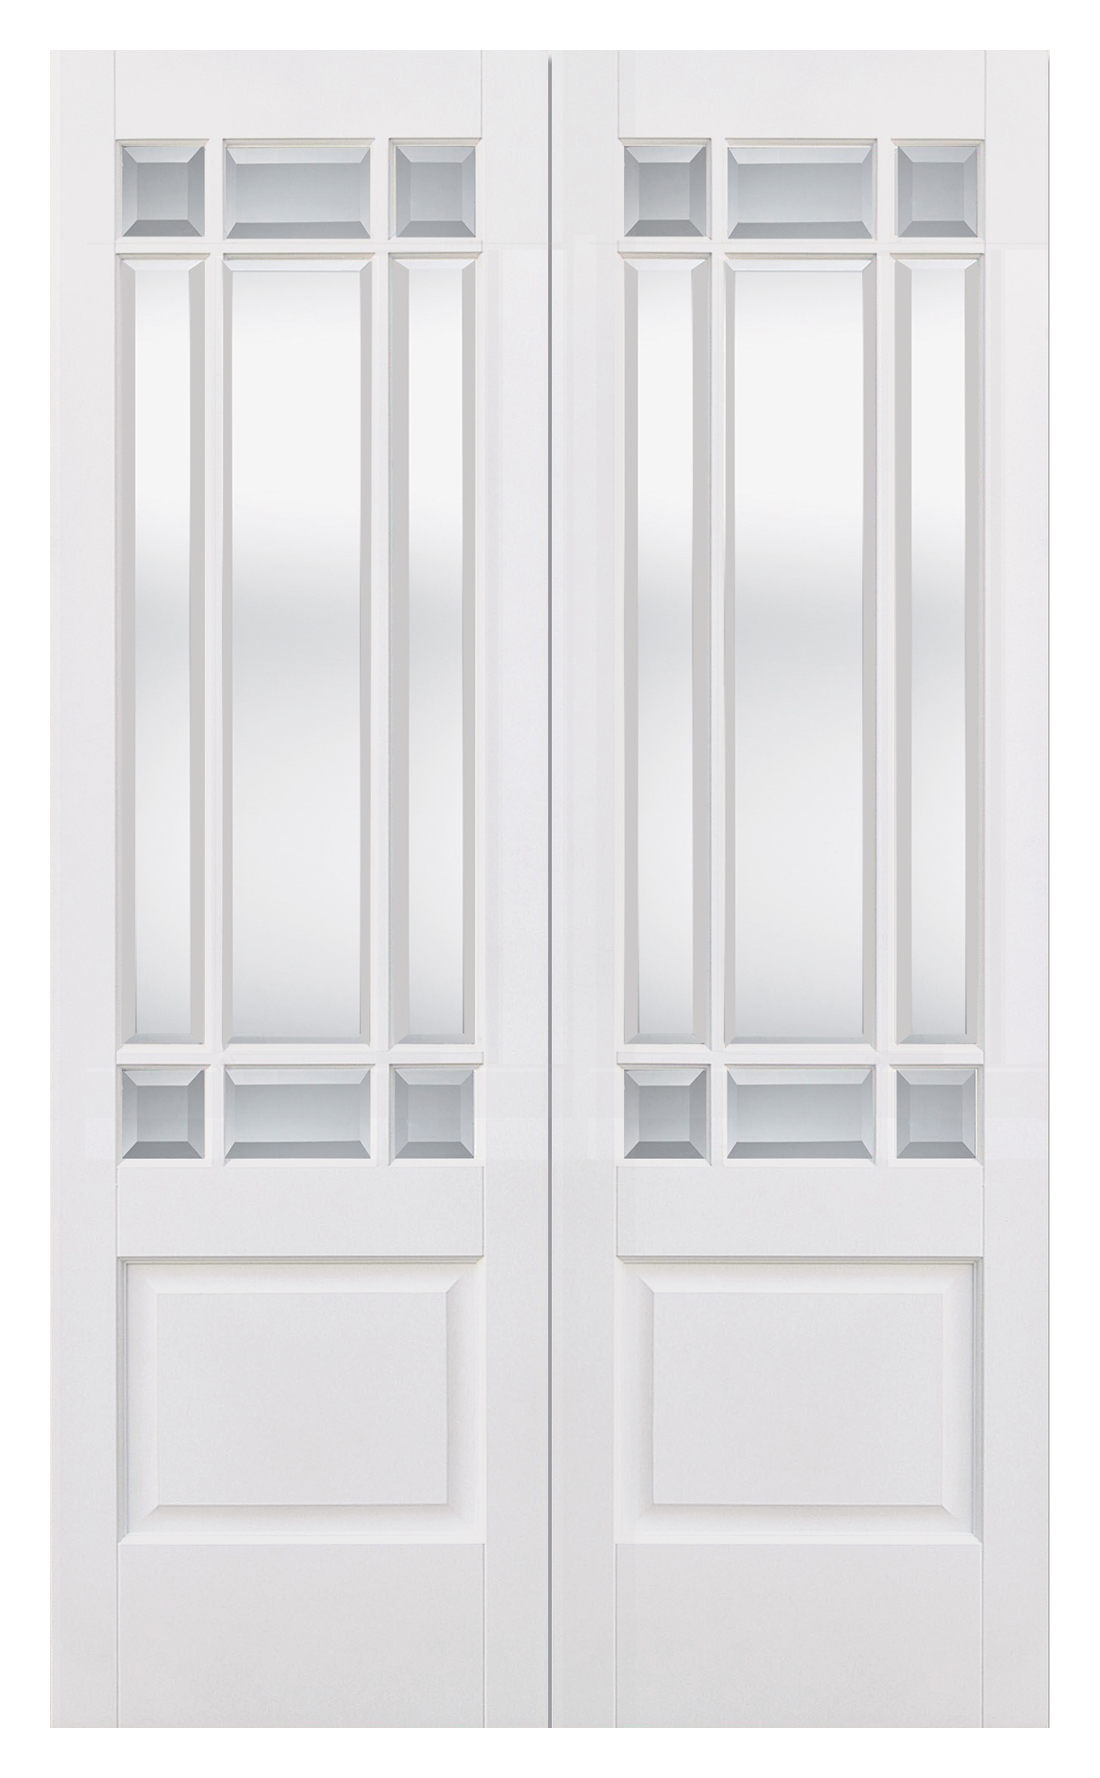 Image of LPD Internal Downham Pair 9 Lite Glazed Primed White Solid Core Door - 1219 x 1981mm